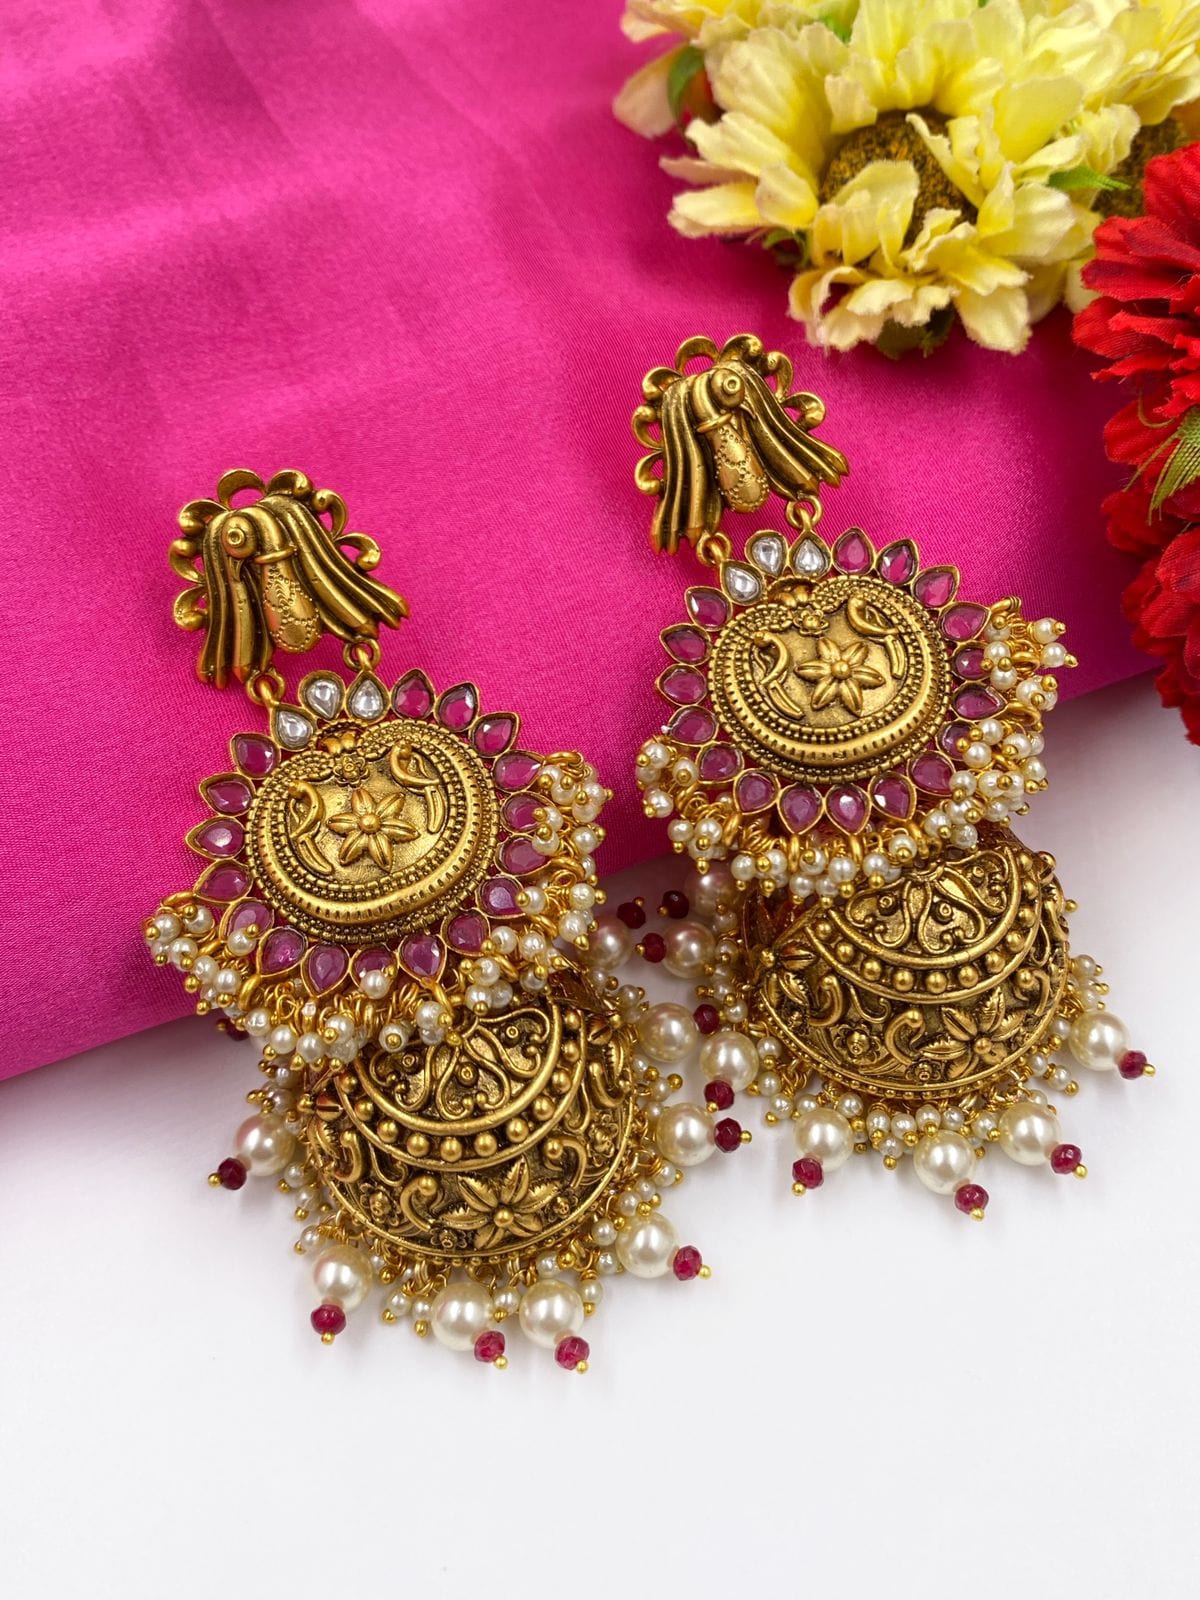 Traditional Lightweight Golden Long Jhumka Earrings For Ladies By Gehna Shop Jhumka earrings